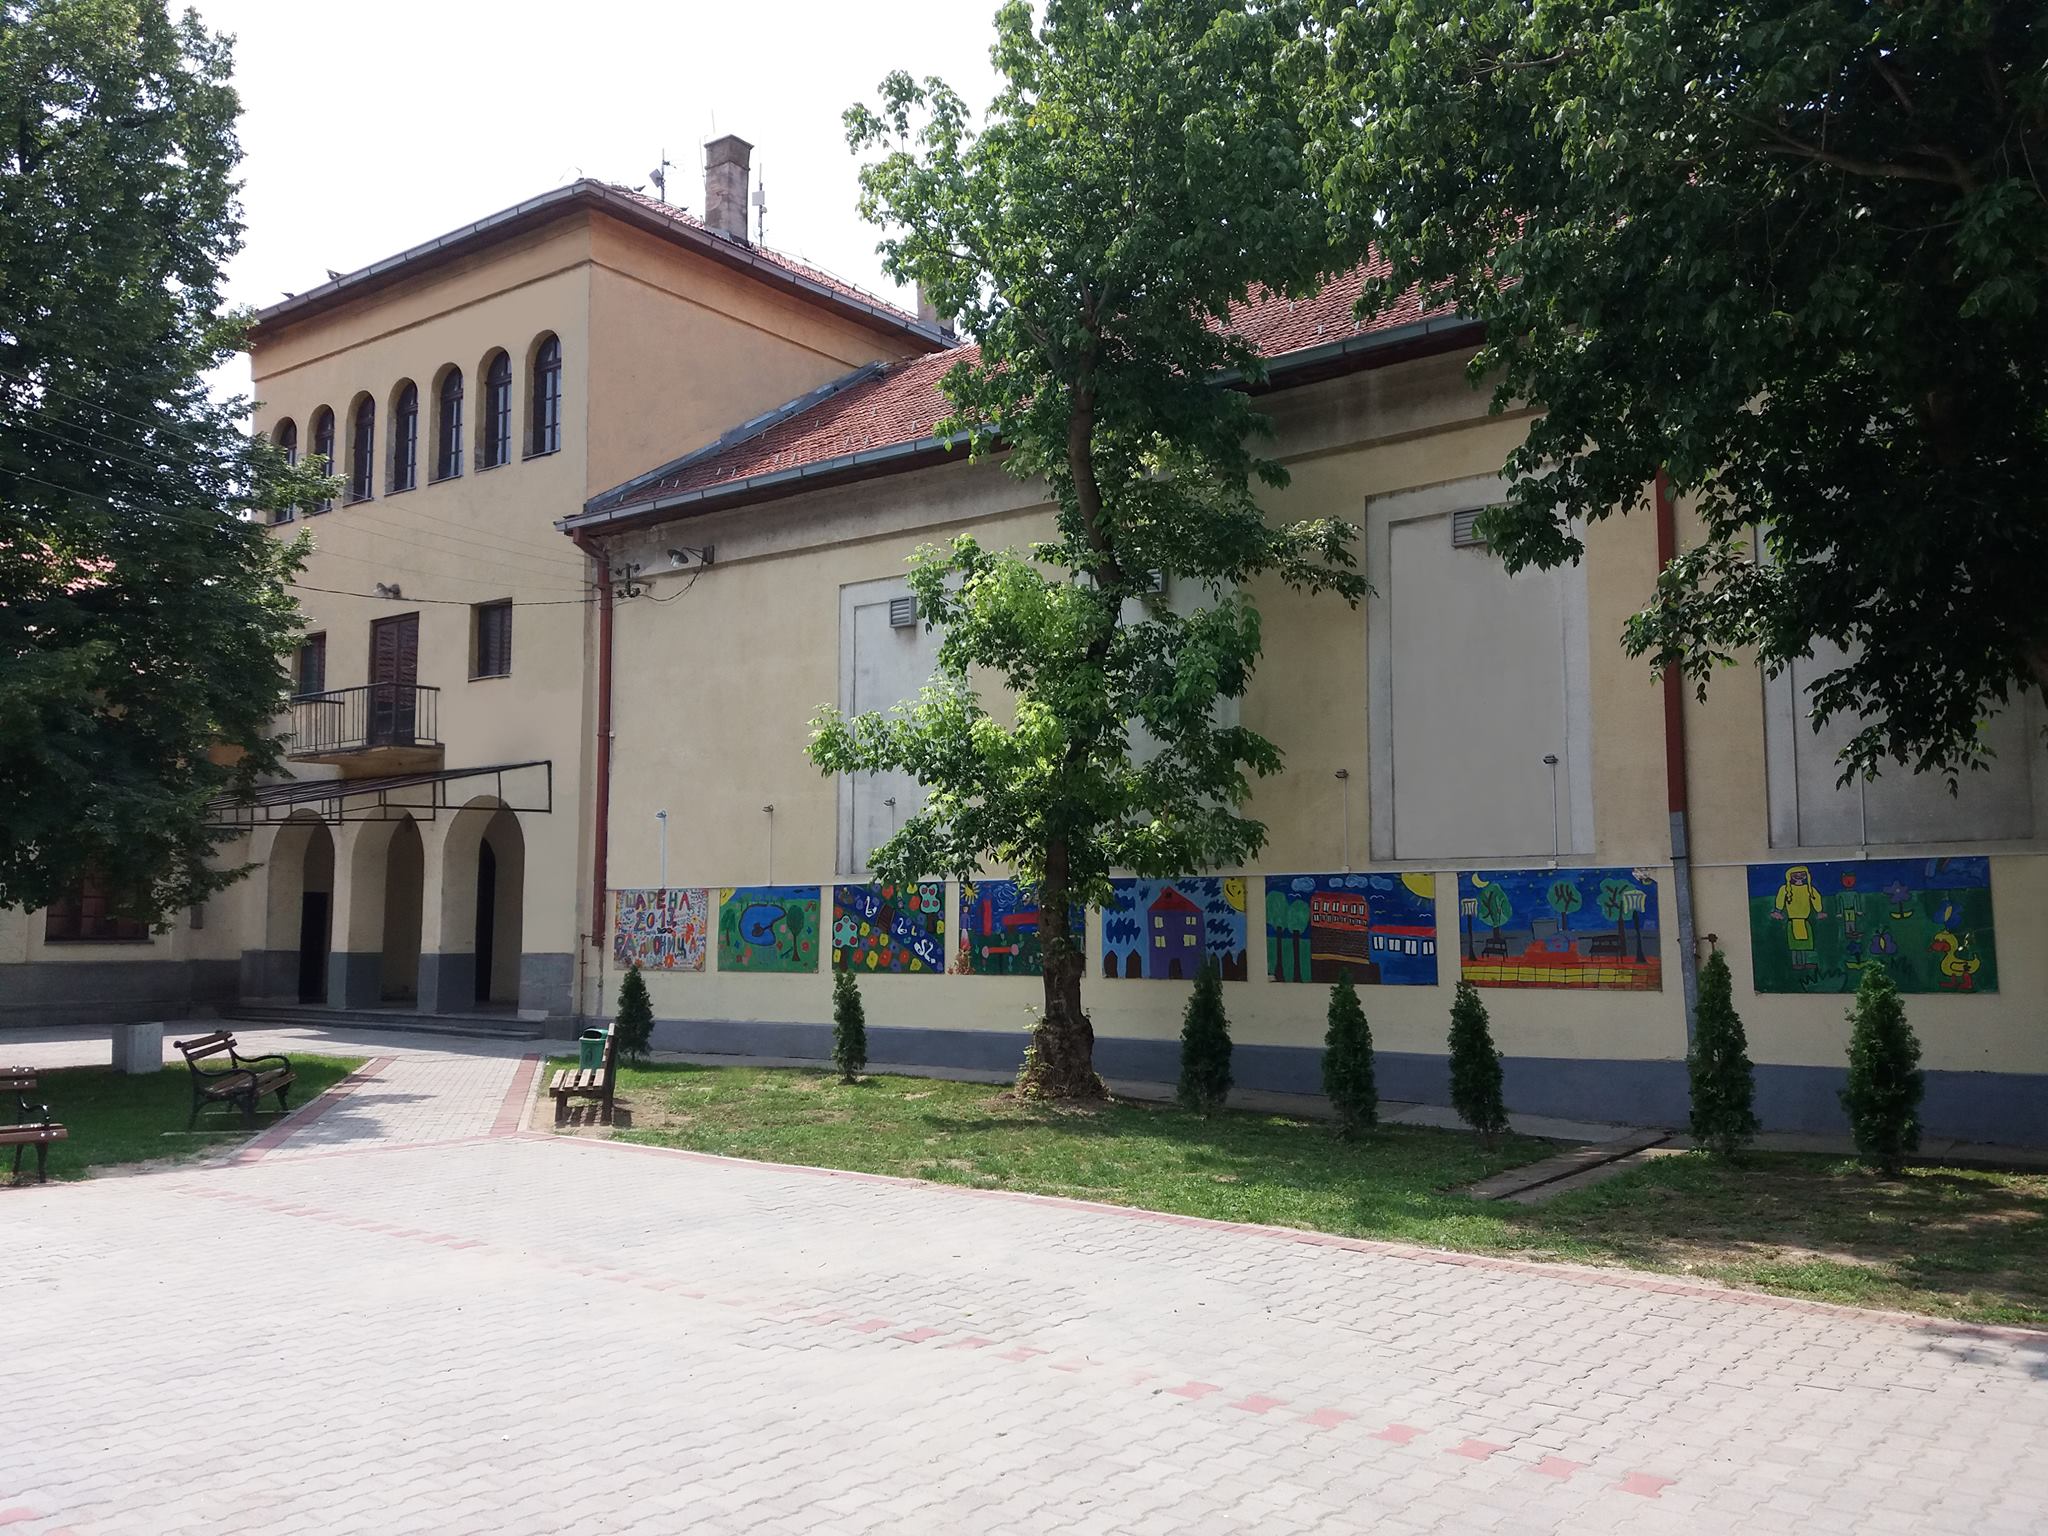 Dom kulture Dolovo: “Kulturni izlog” za mesec maj 2022